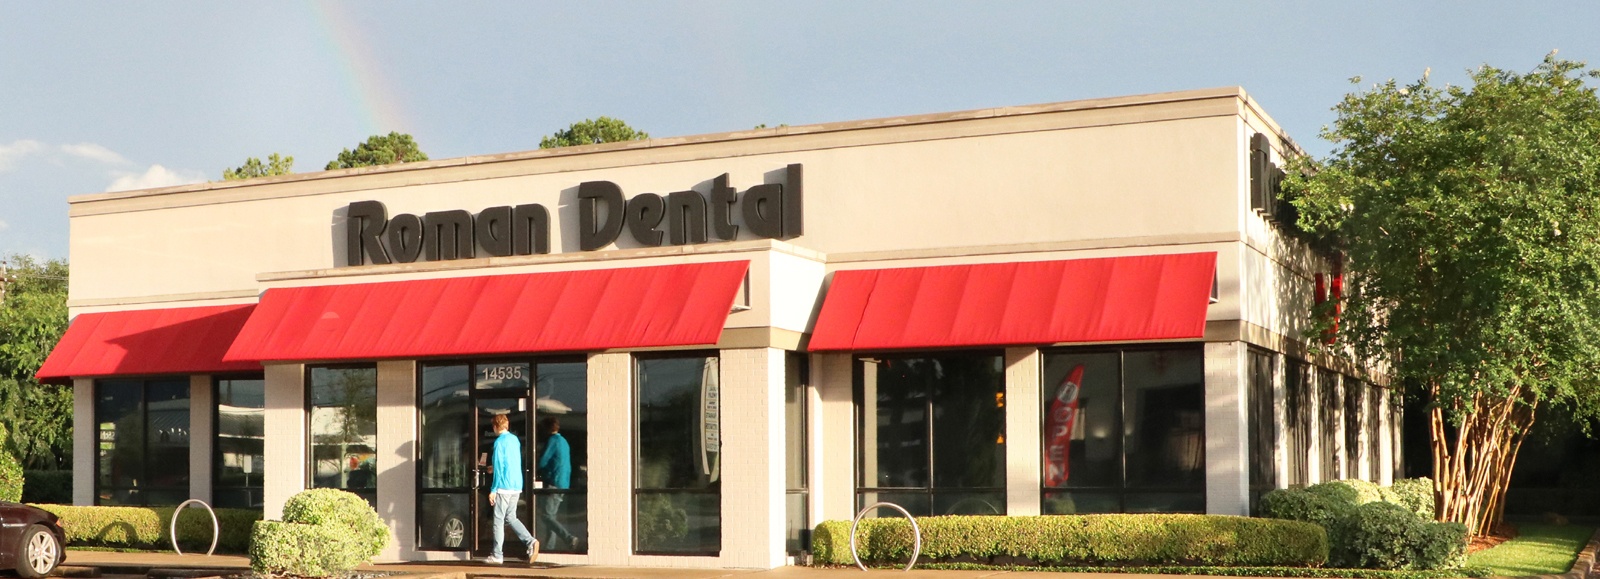 Outside view of Roman Dental office in Houston